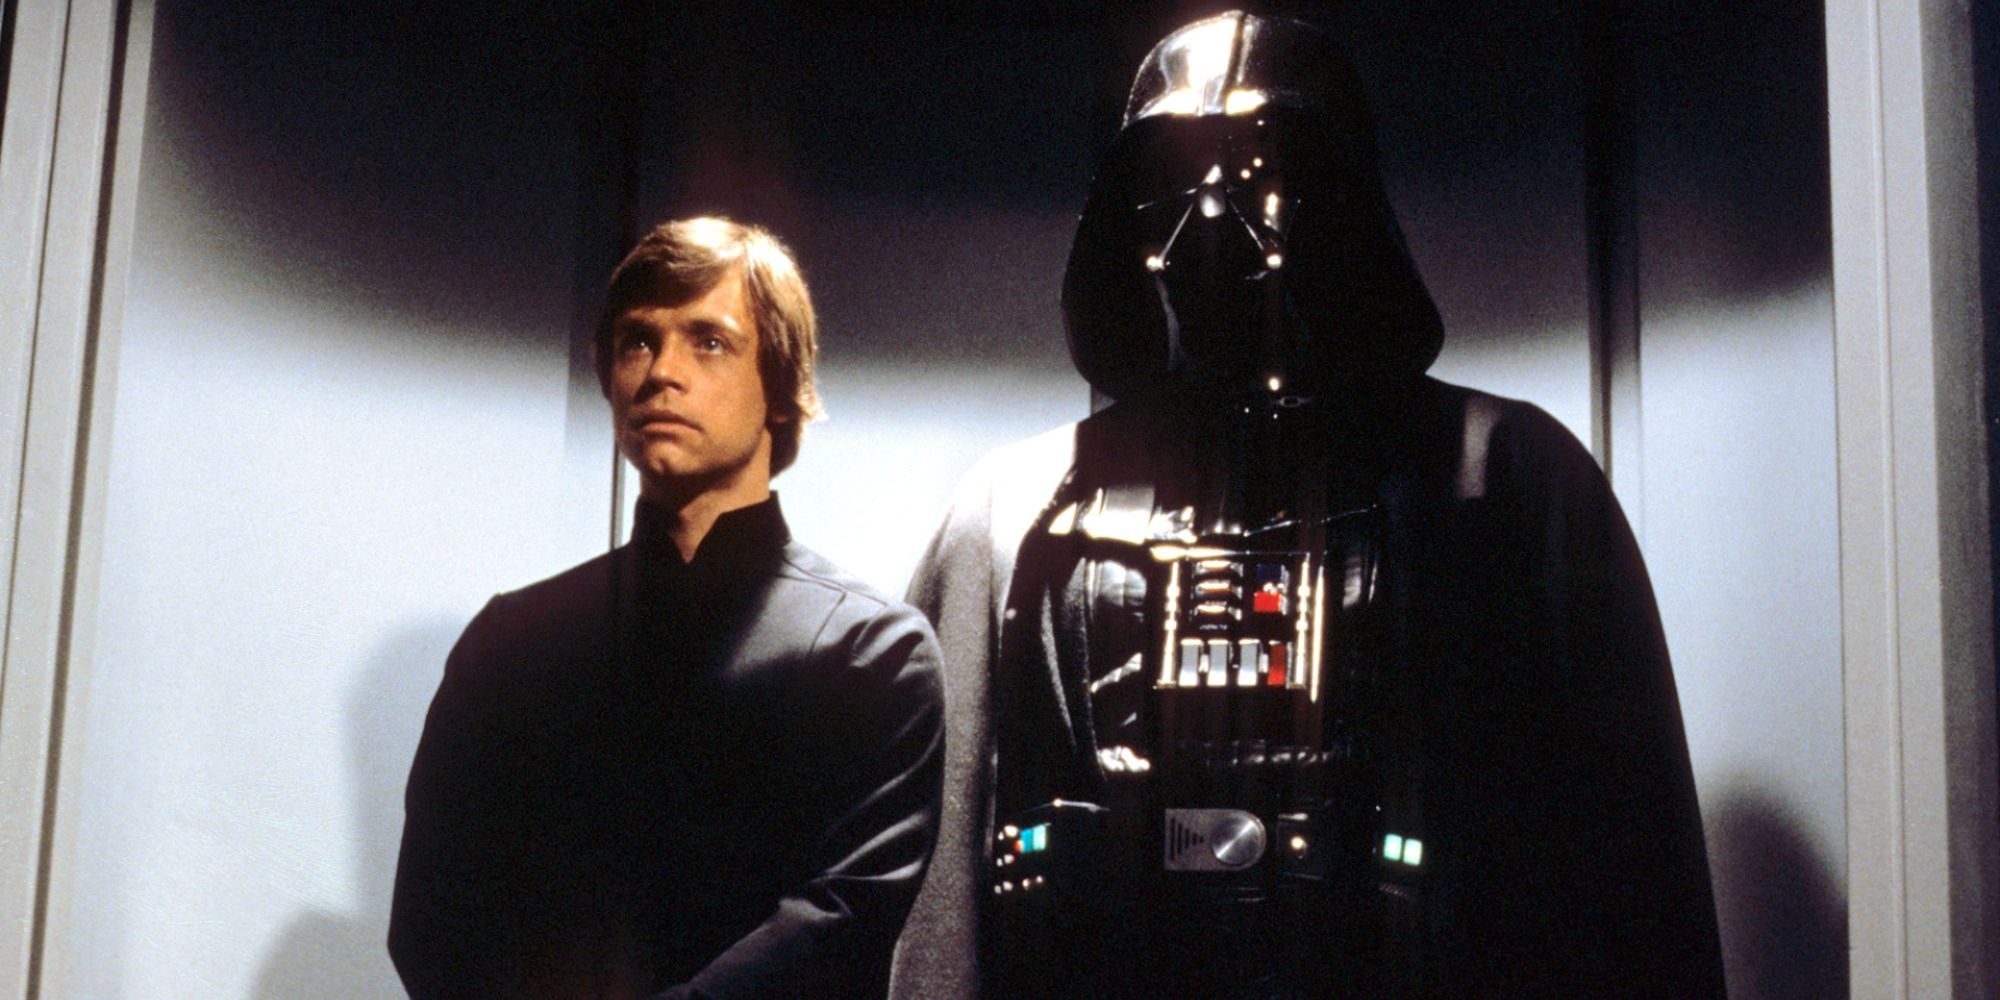 Luke Skywalker standing next to Darth Vader